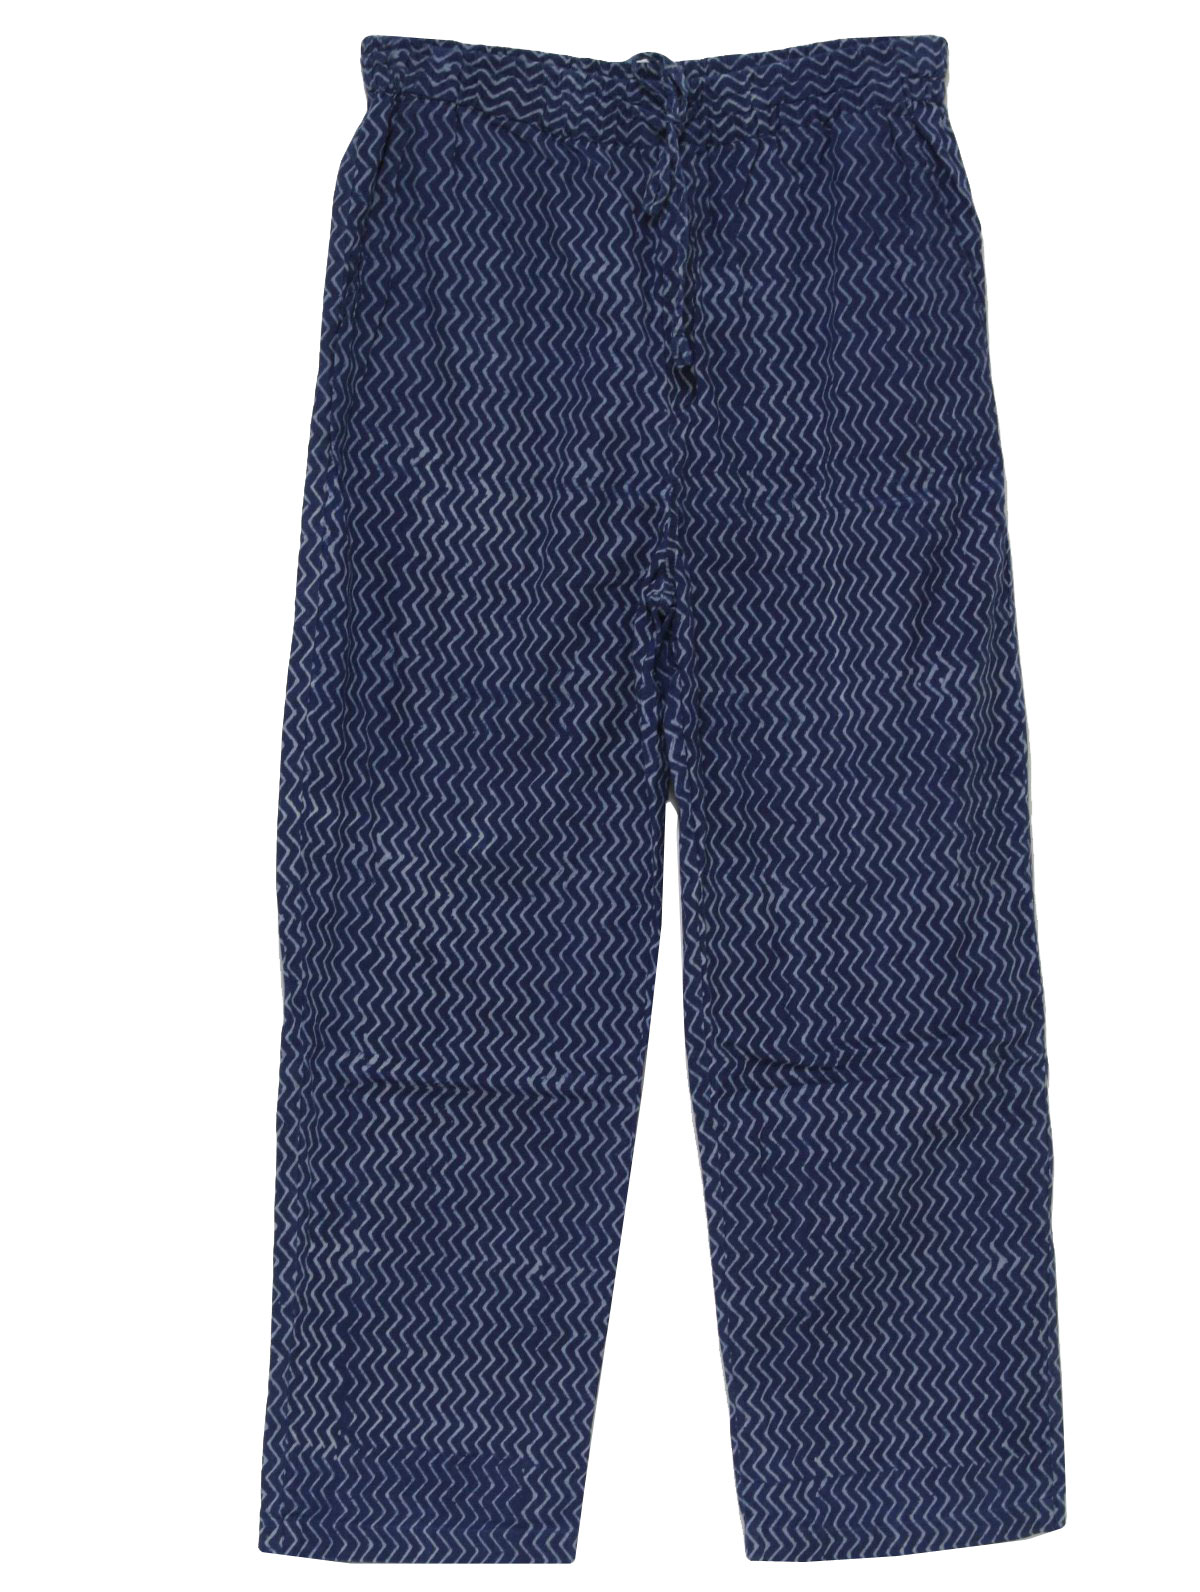 Retro Nineties Pants: 90s -Fabindia- Mens dark blue and light blue zig ...